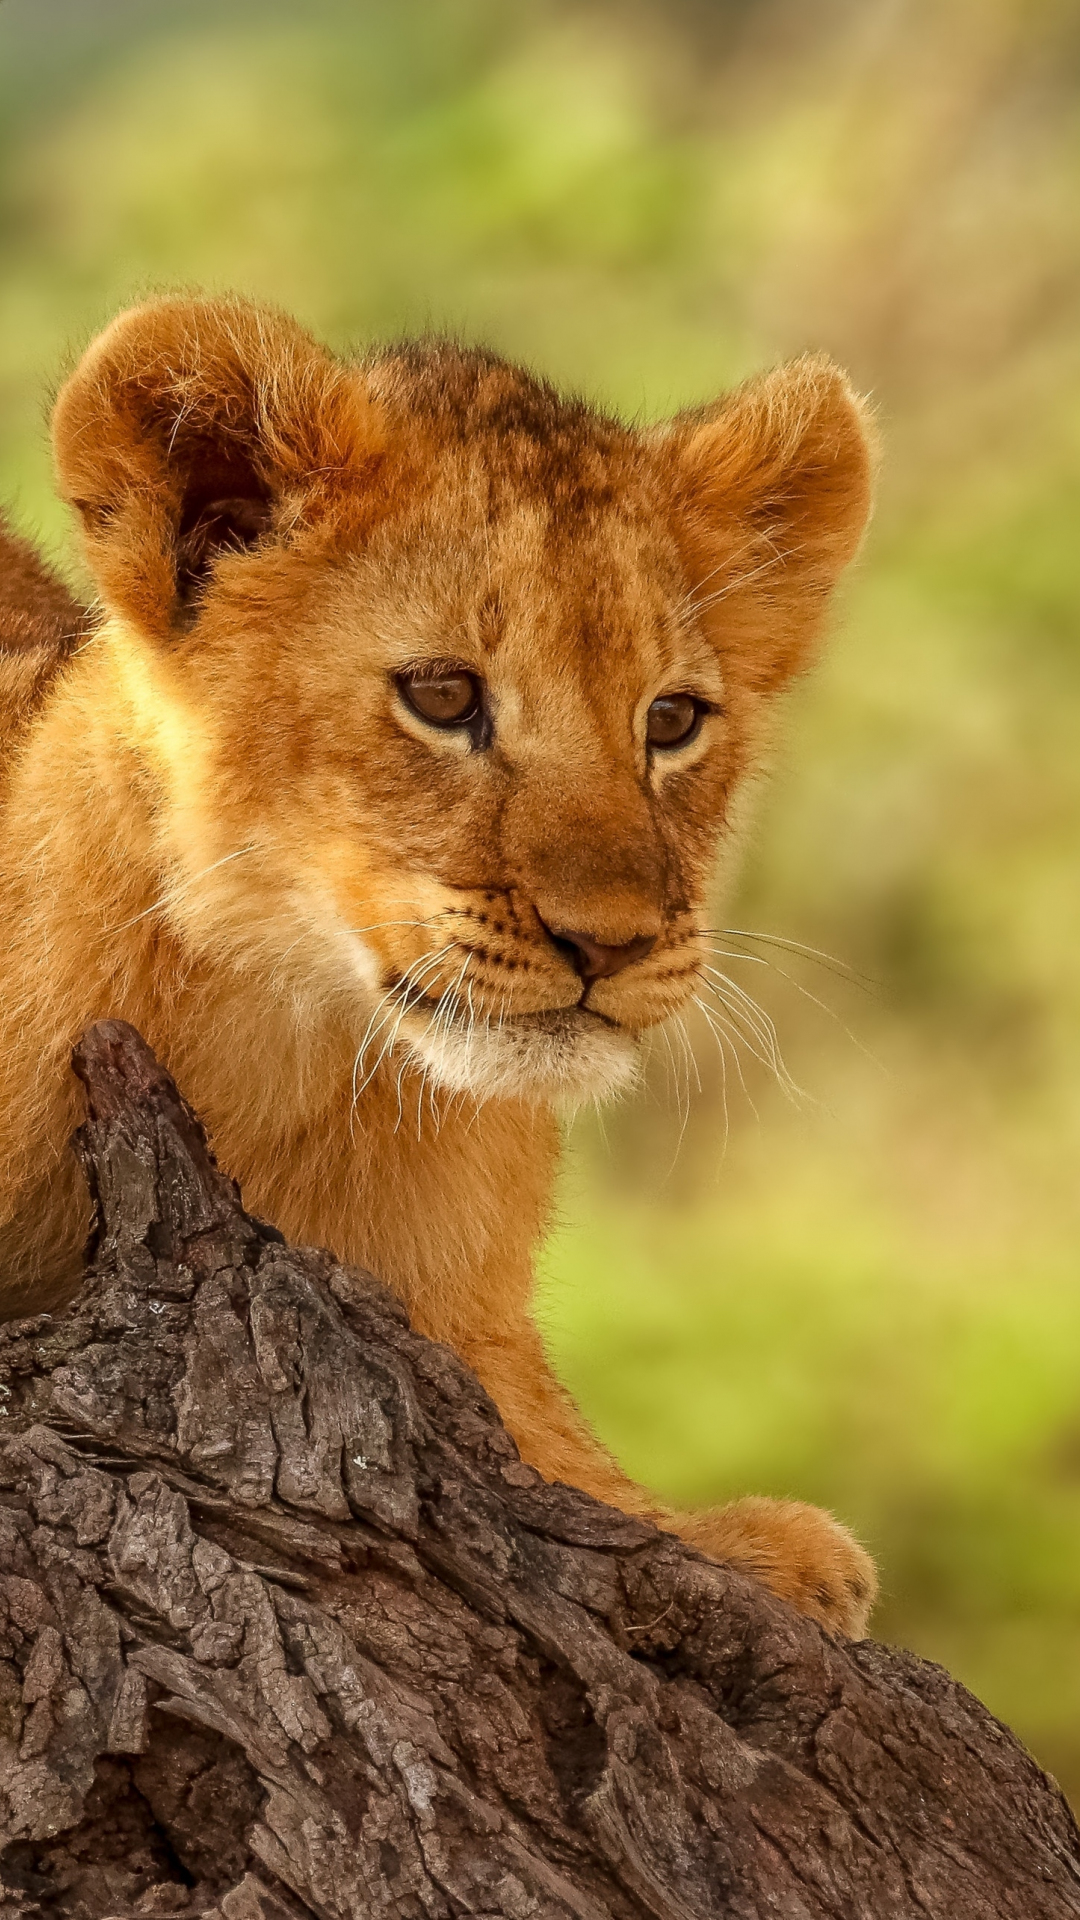 Download wallpaper 1080x1920 lion cub, cute, animal, 1080p ...